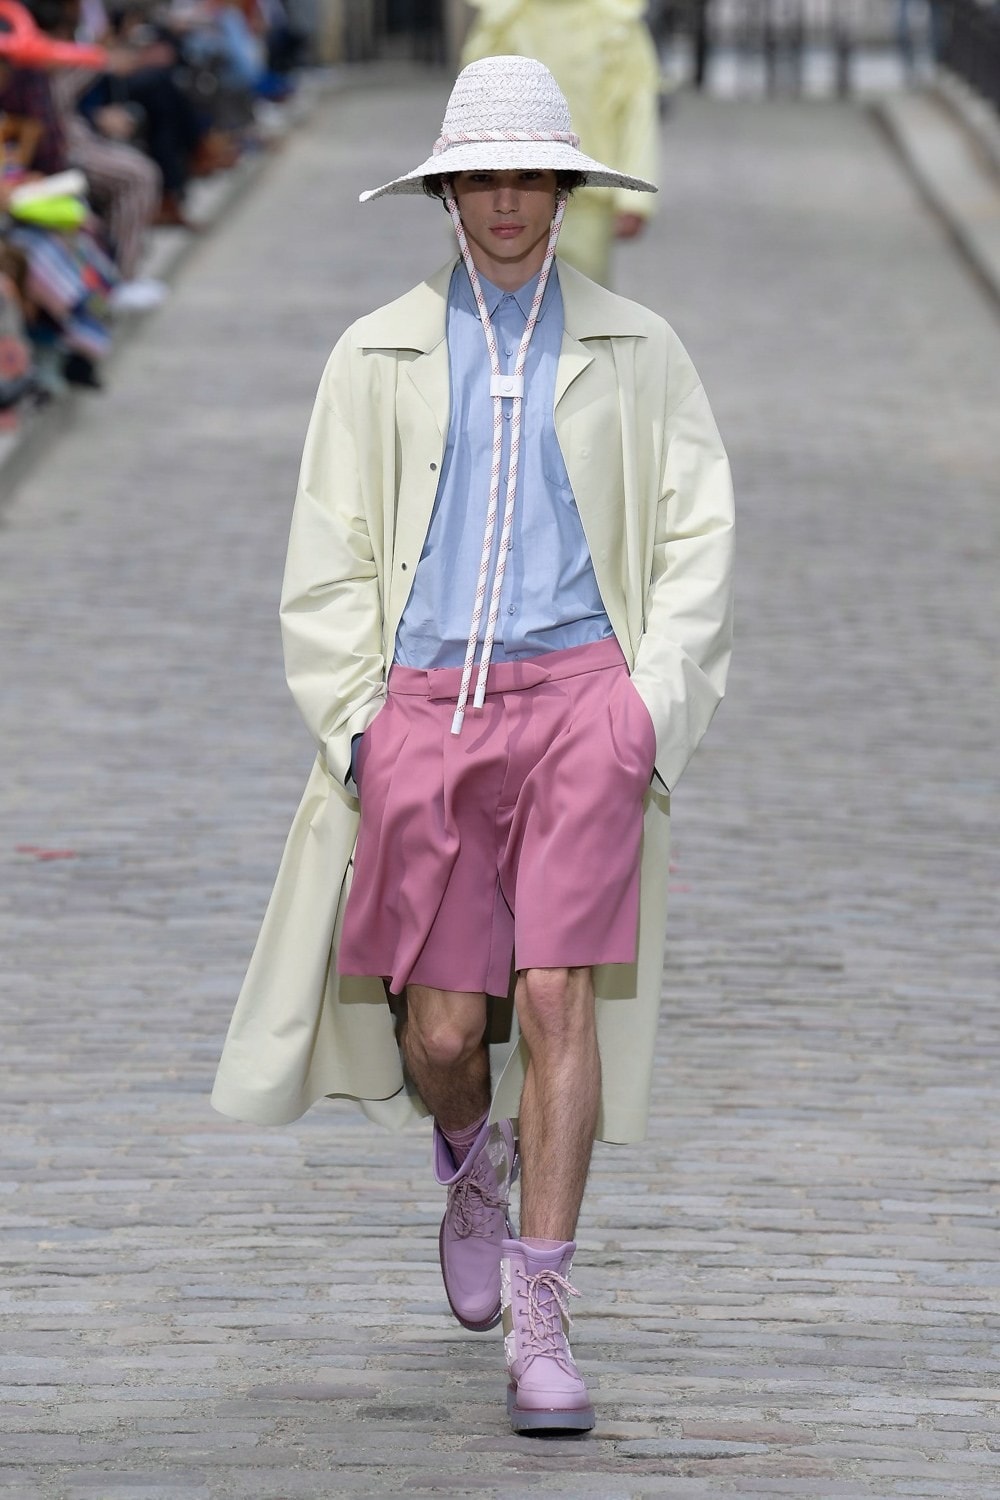 Louis Vuitton Virgil Abloh Spring Summer 2020 Paris Fashion Week Men's Show Collection Jacket Yellow Shirt Blue Shorts Pink Hat White